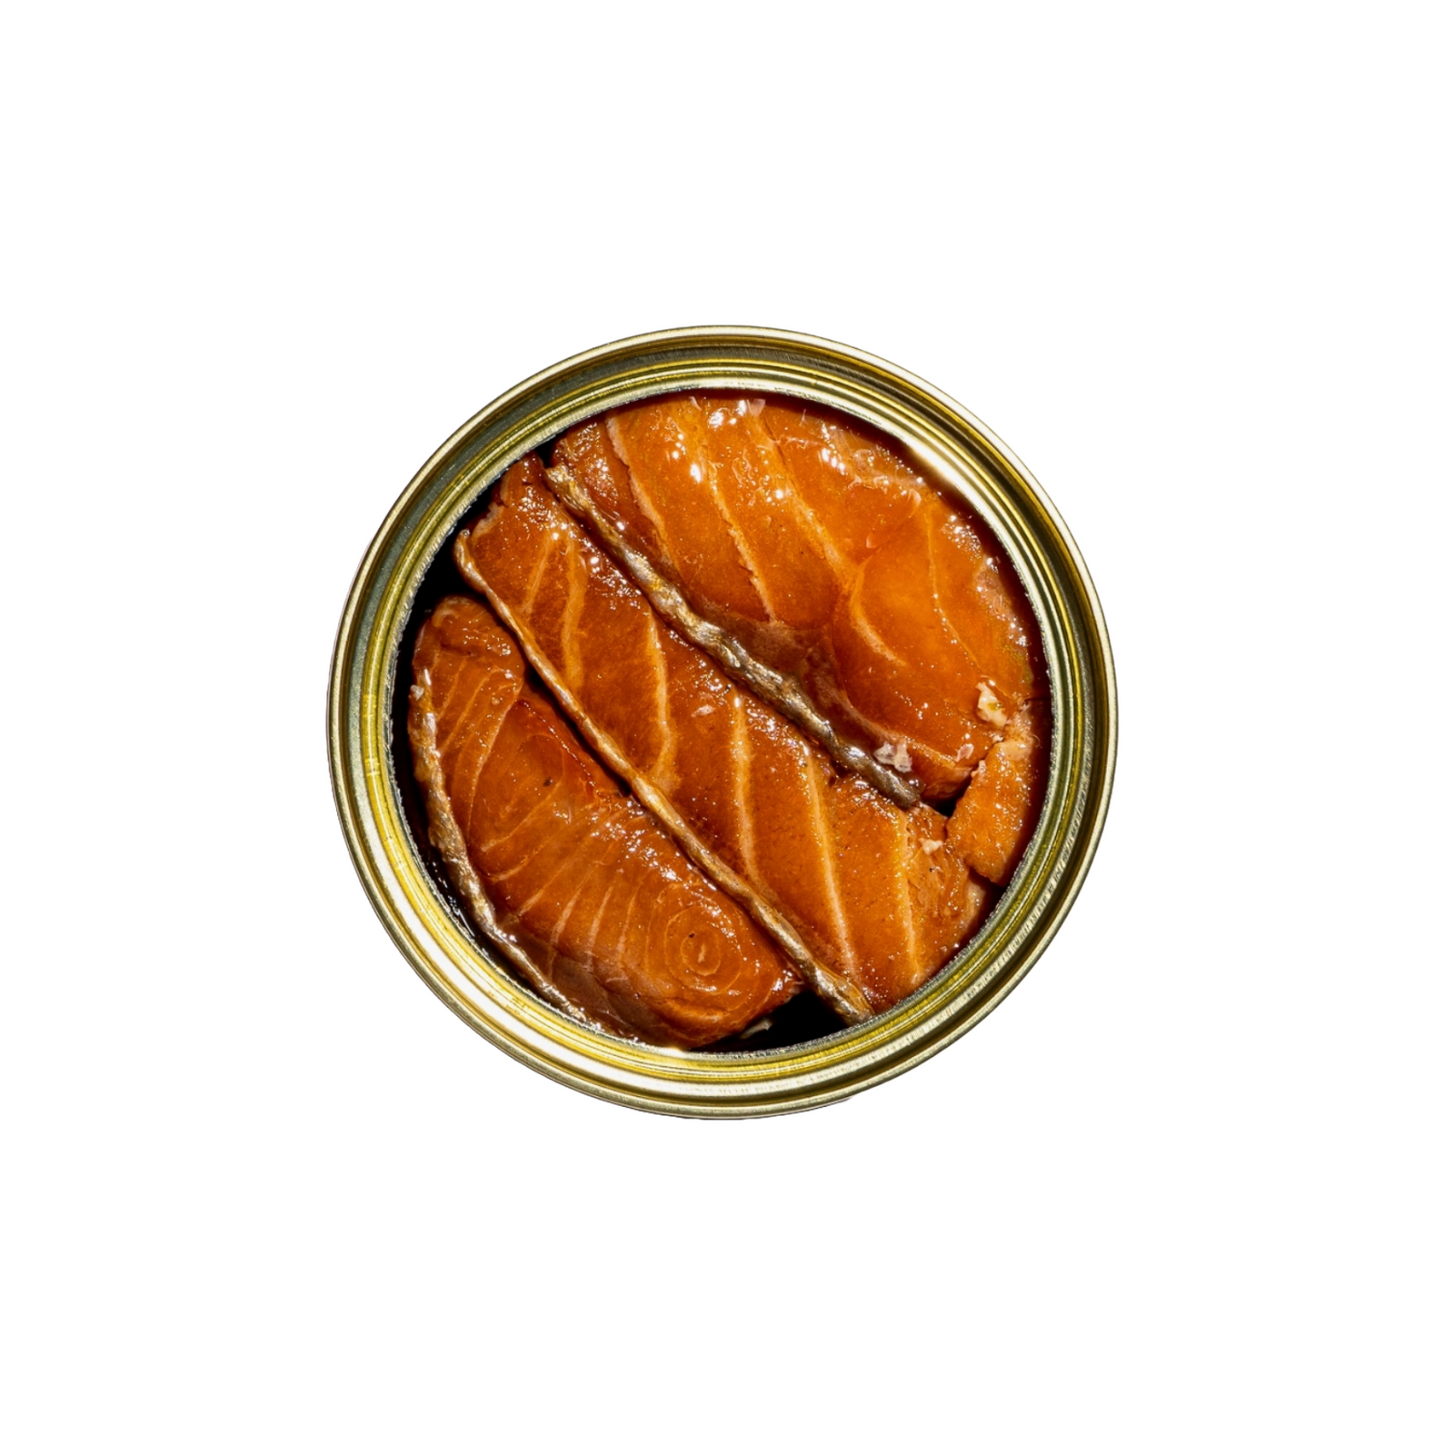 Smoked Atlantic Salmon by Fishwife